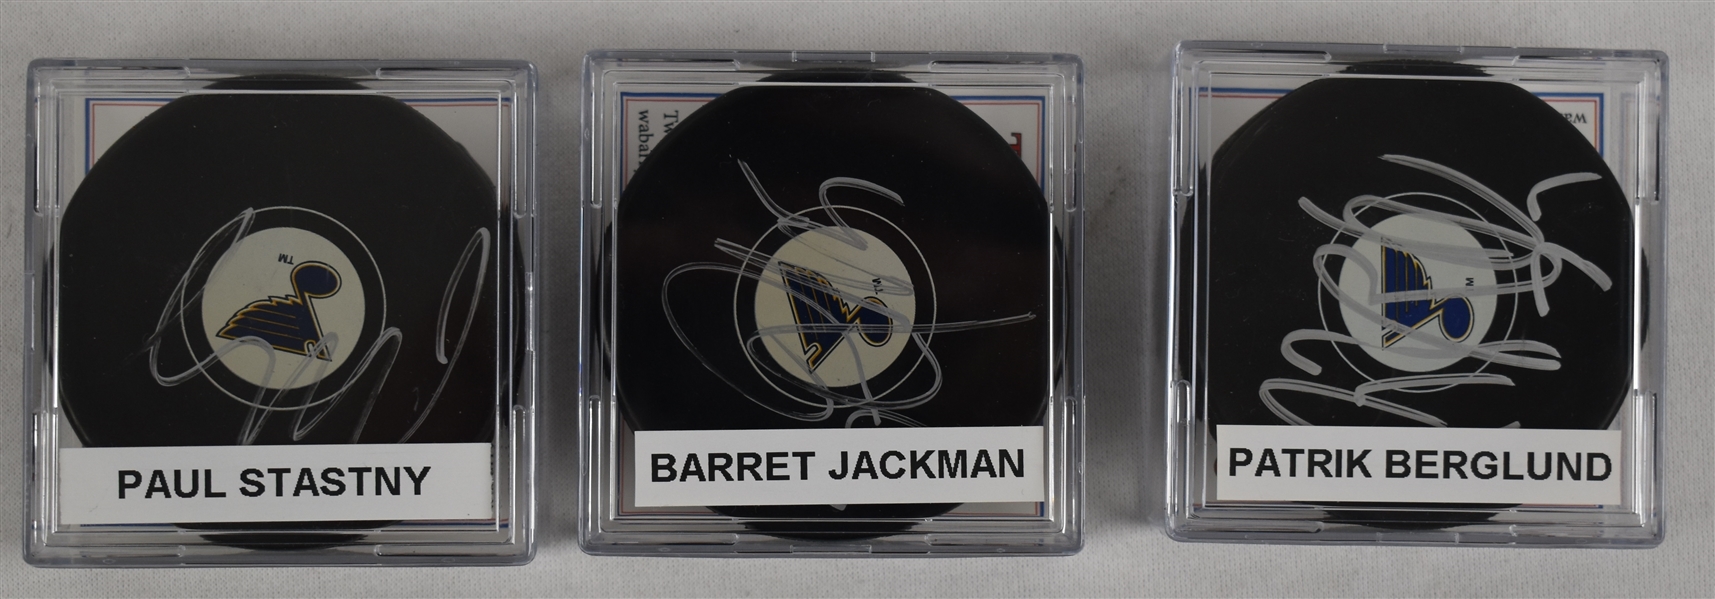 Stastny Jackman & Berglund Lot of 3 Autographed Hockey Pucks w/Case